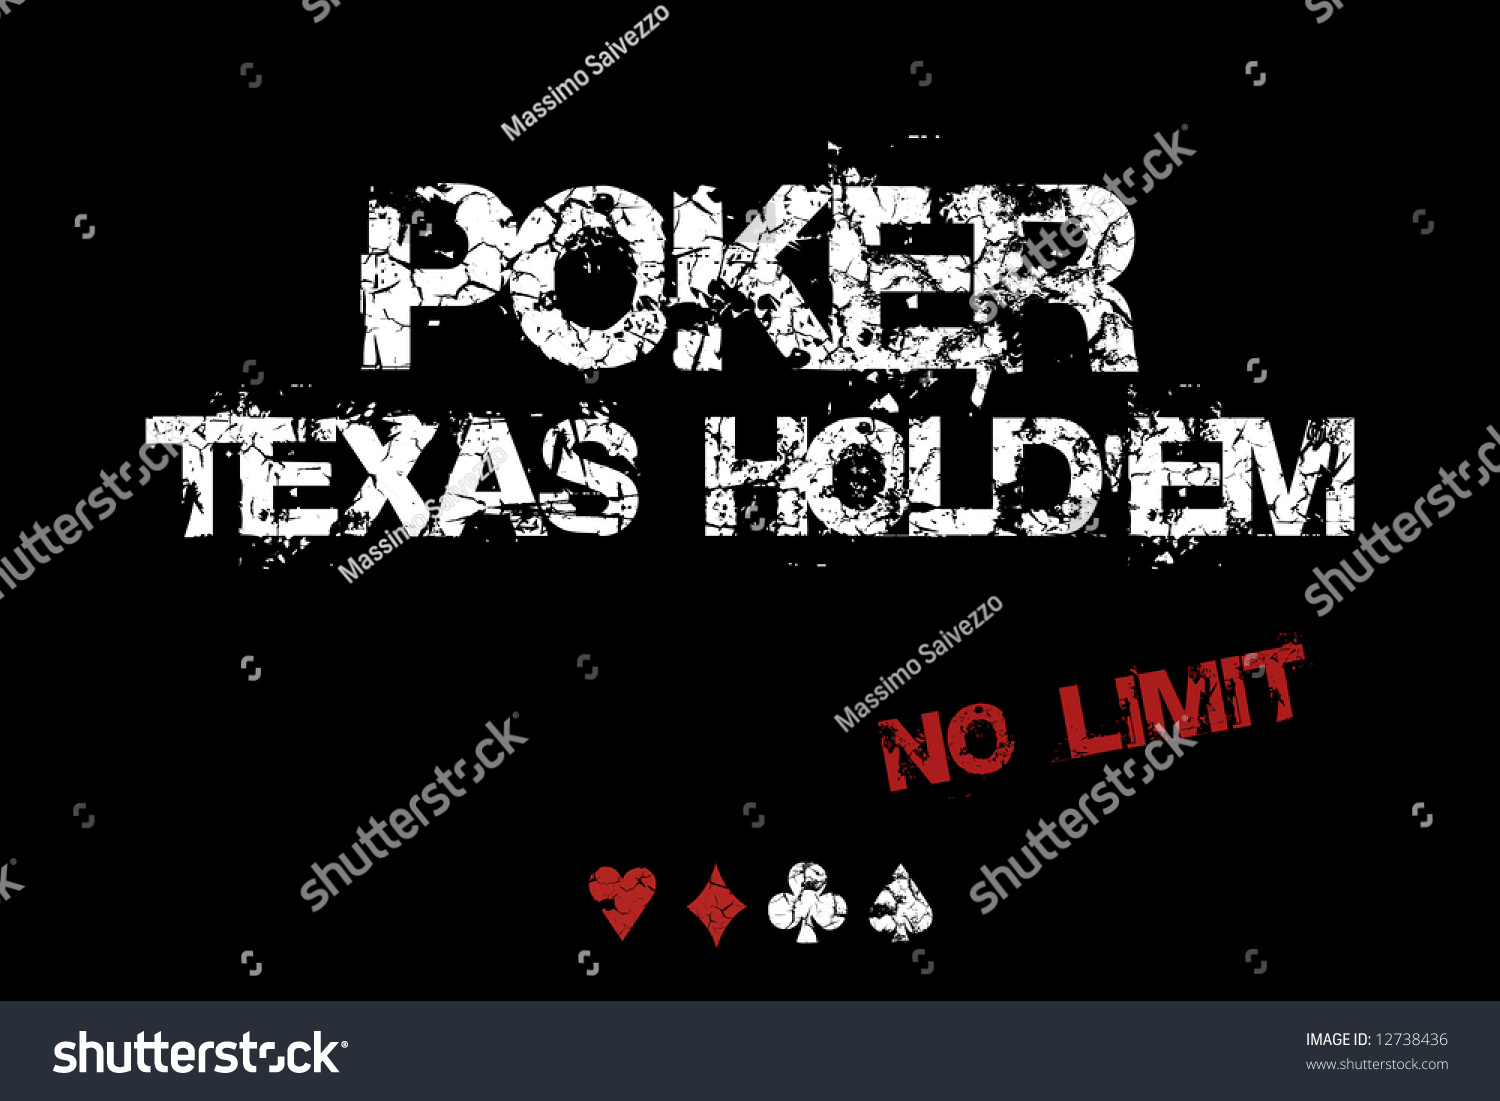 Free poker texas hold em no limit